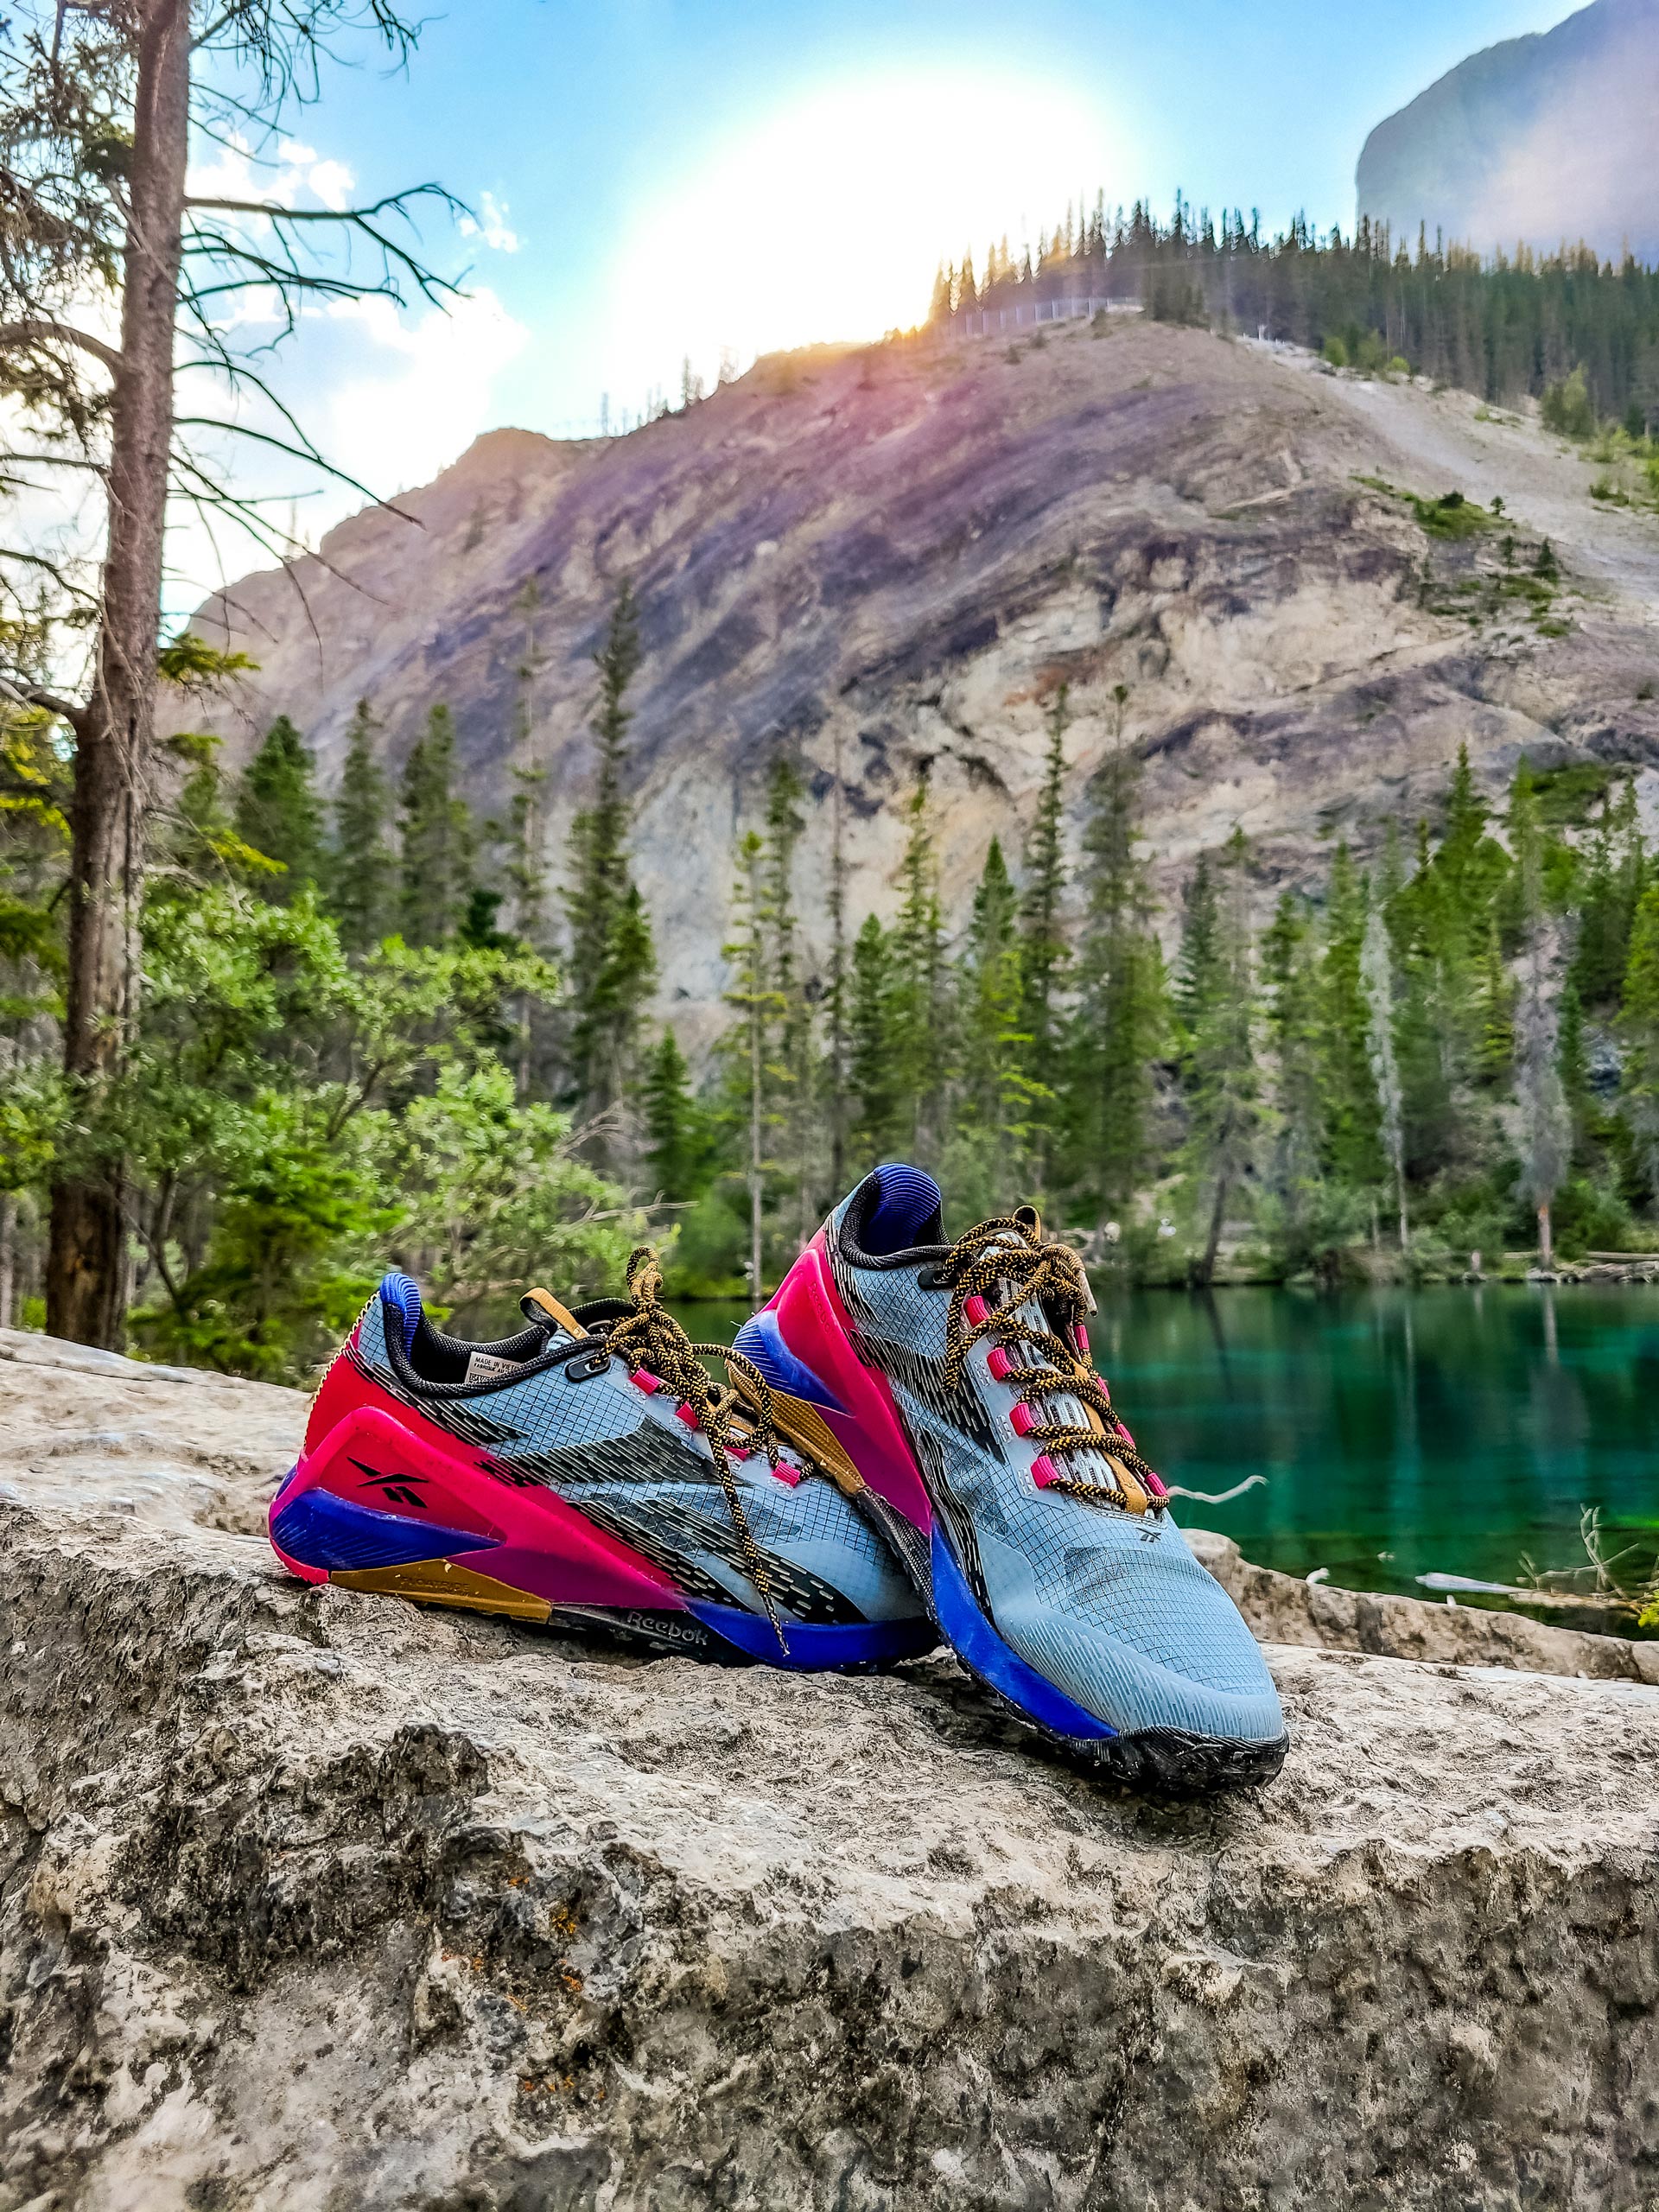 Reebok Nano X1 Adventure trail runner cross training shoe sitting on rocks by Grassi Lakes Canmore Alberta